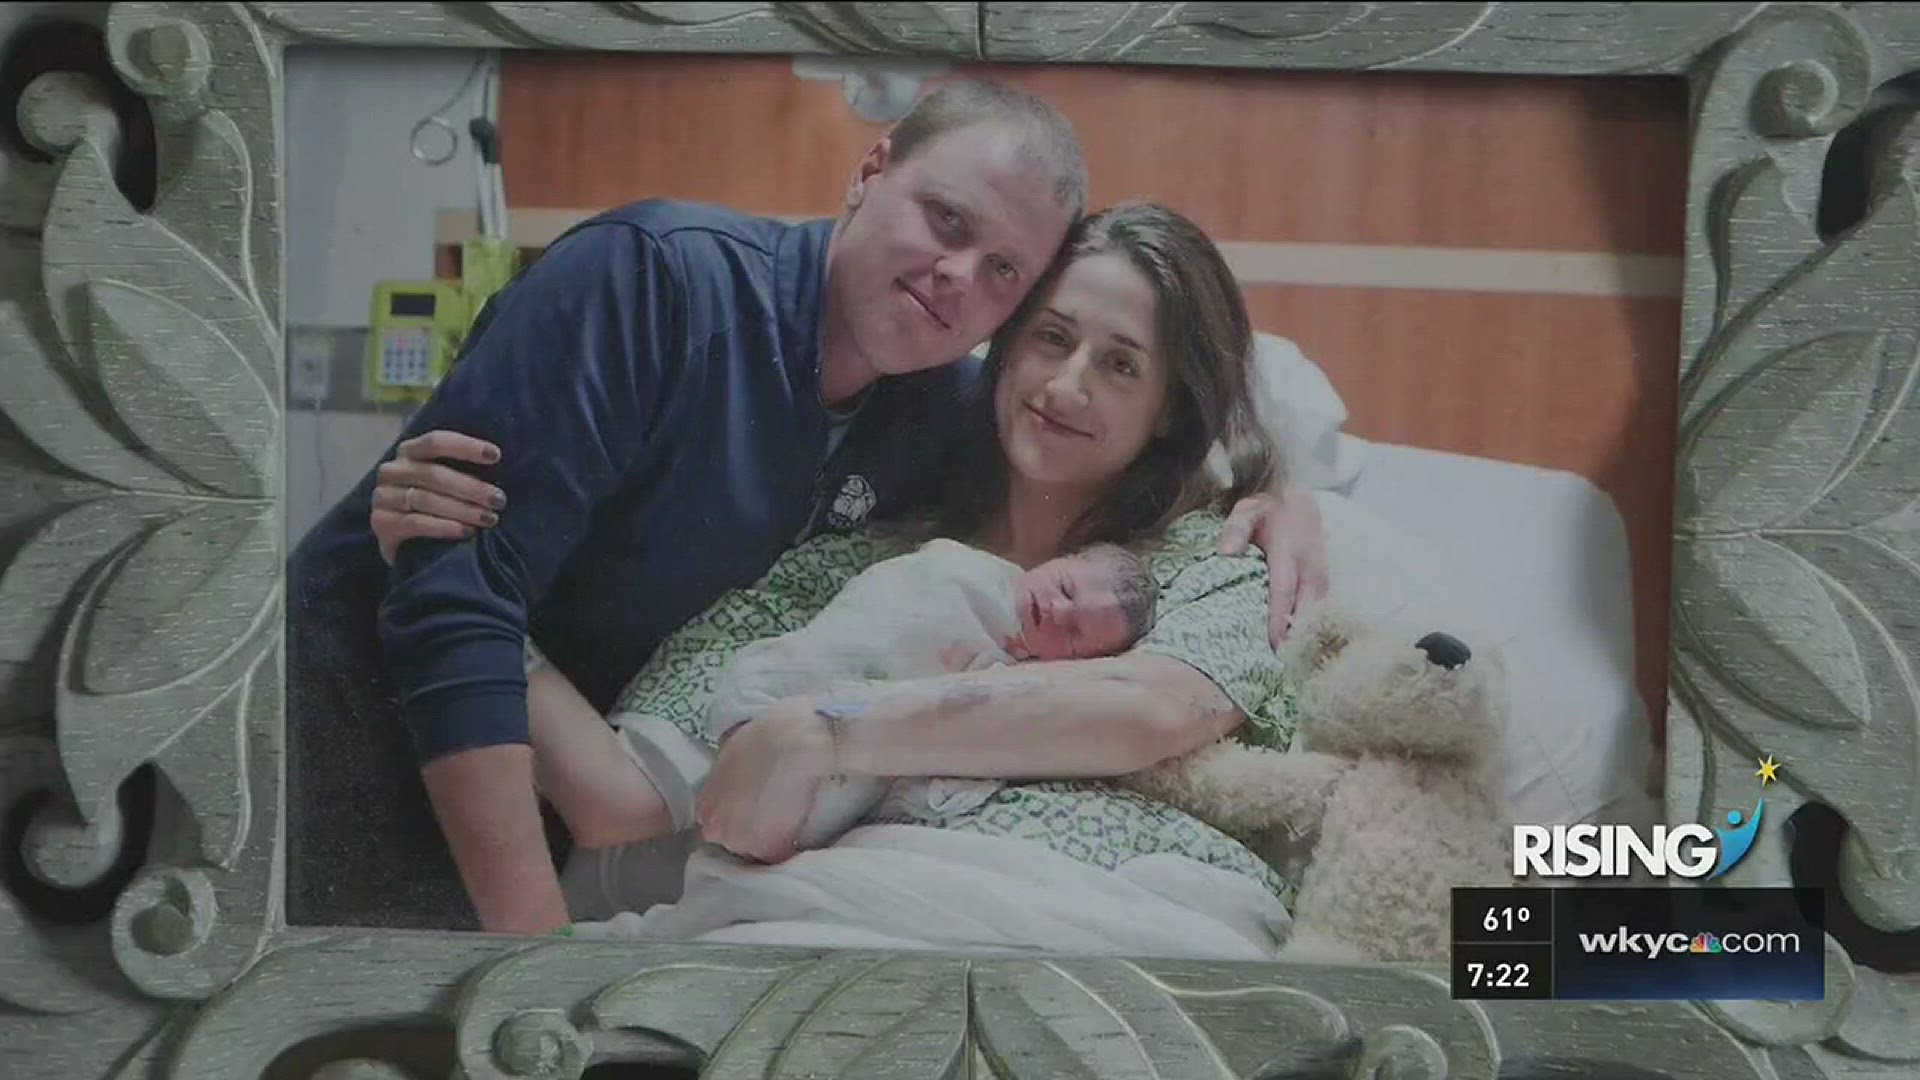 Rising couple breaks silent taboo to honor stillborn child